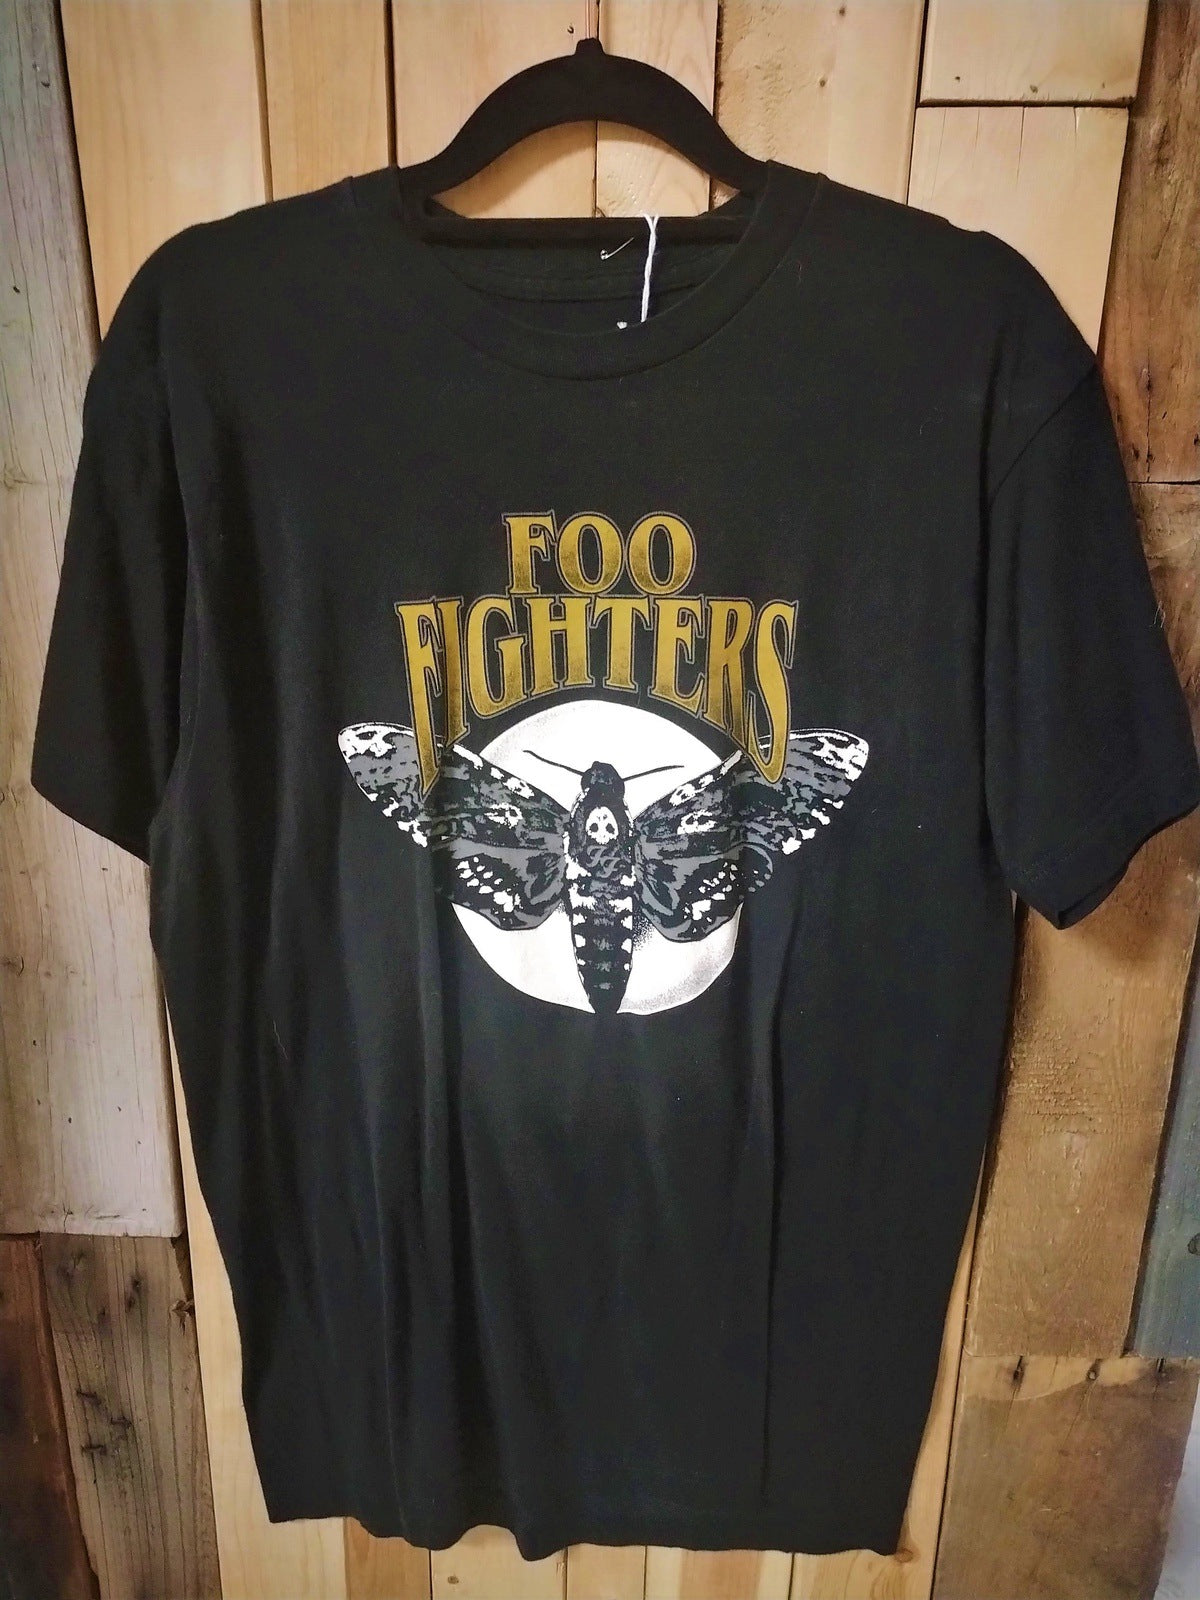 Foo Fighters Tee Shirt Size Medium